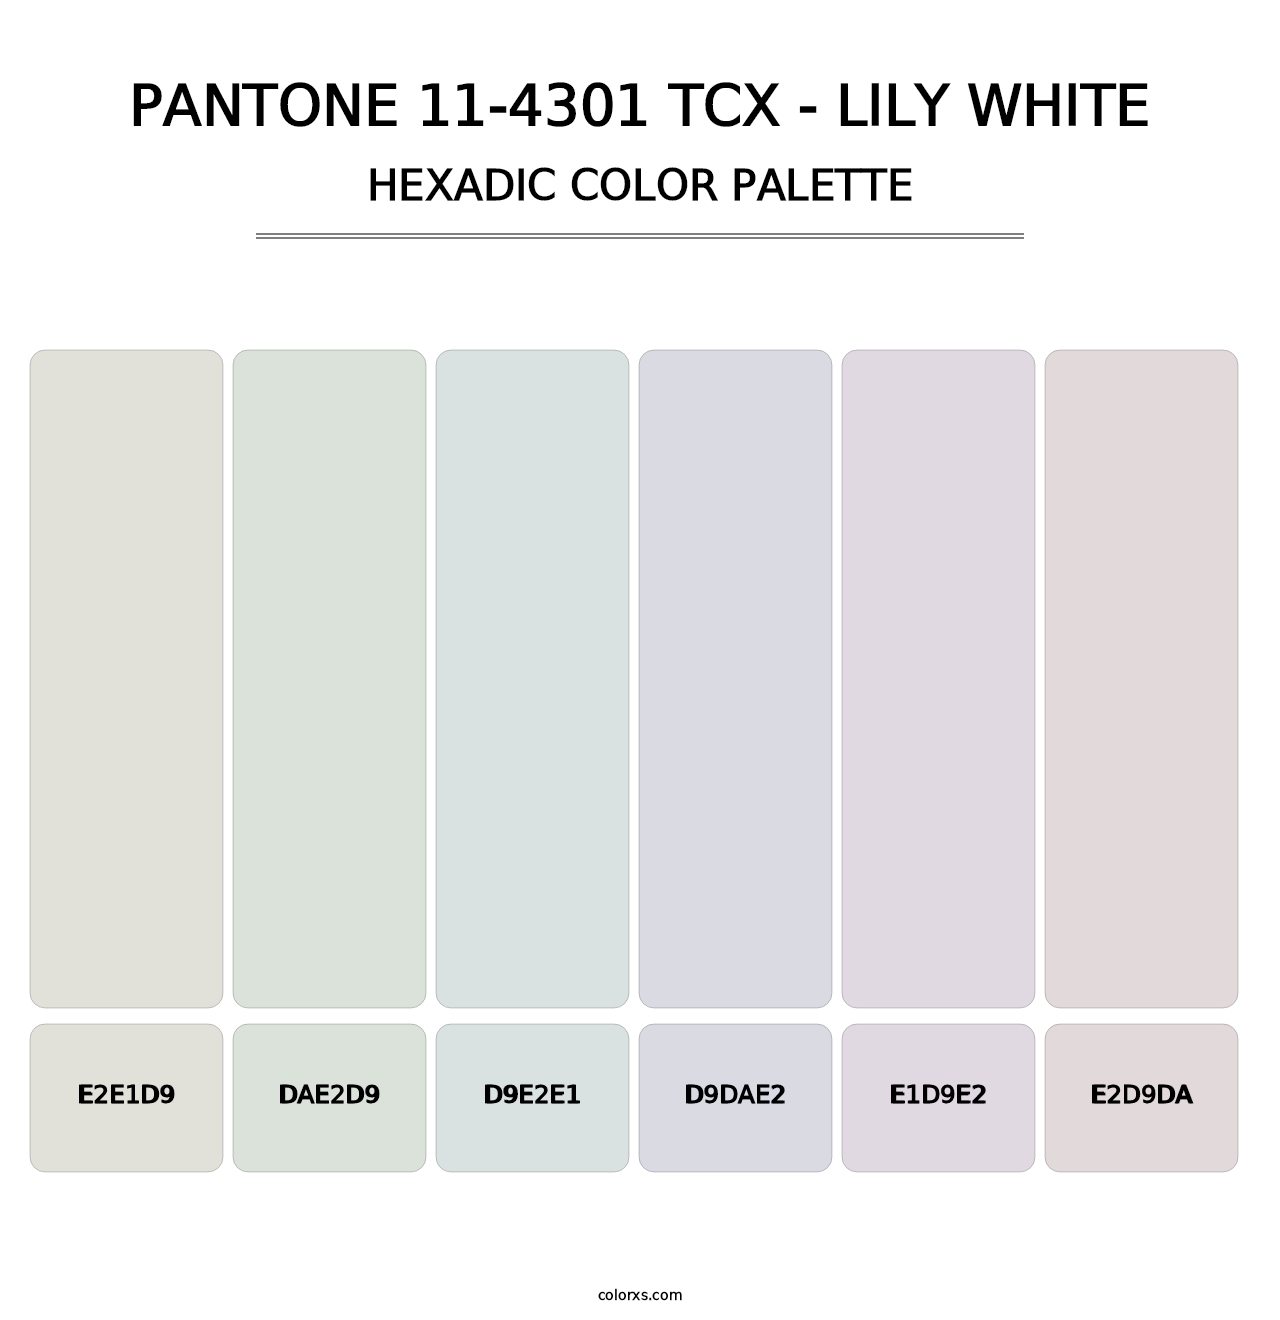 PANTONE 11-4301 TCX - Lily White - Hexadic Color Palette